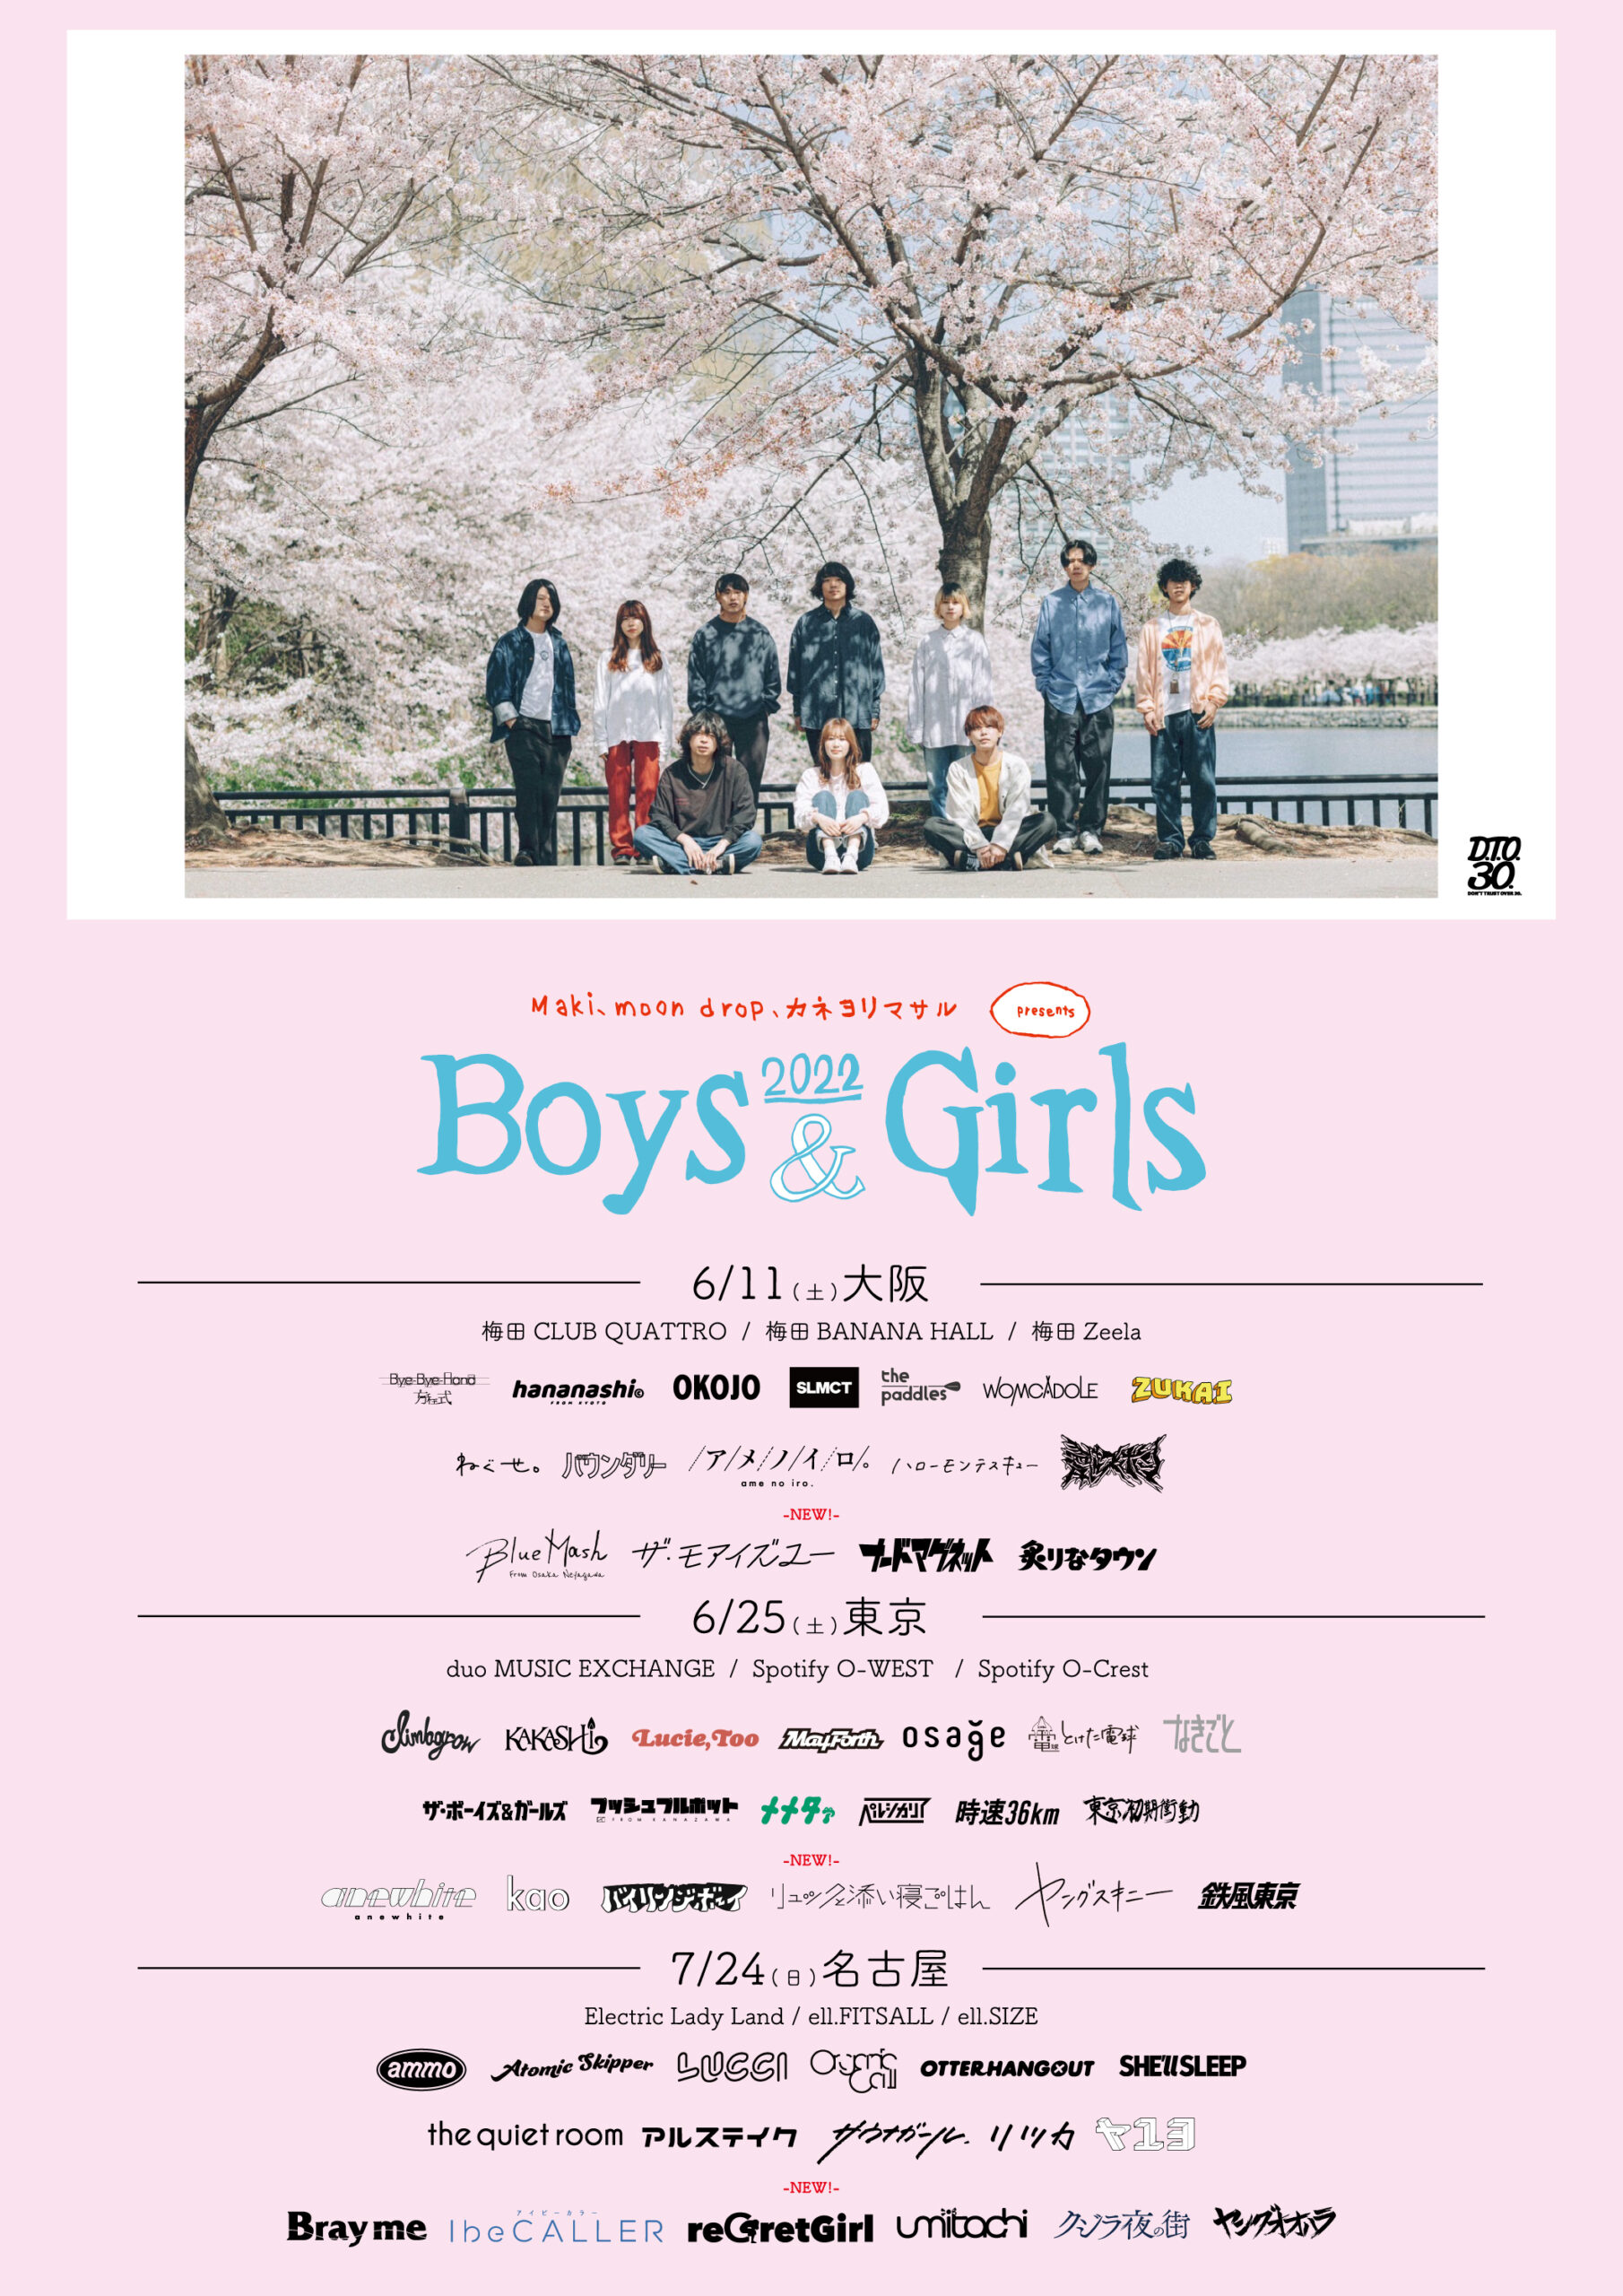 Maki & moon drop & カネヨリマサル pre. “Boys & Girls”